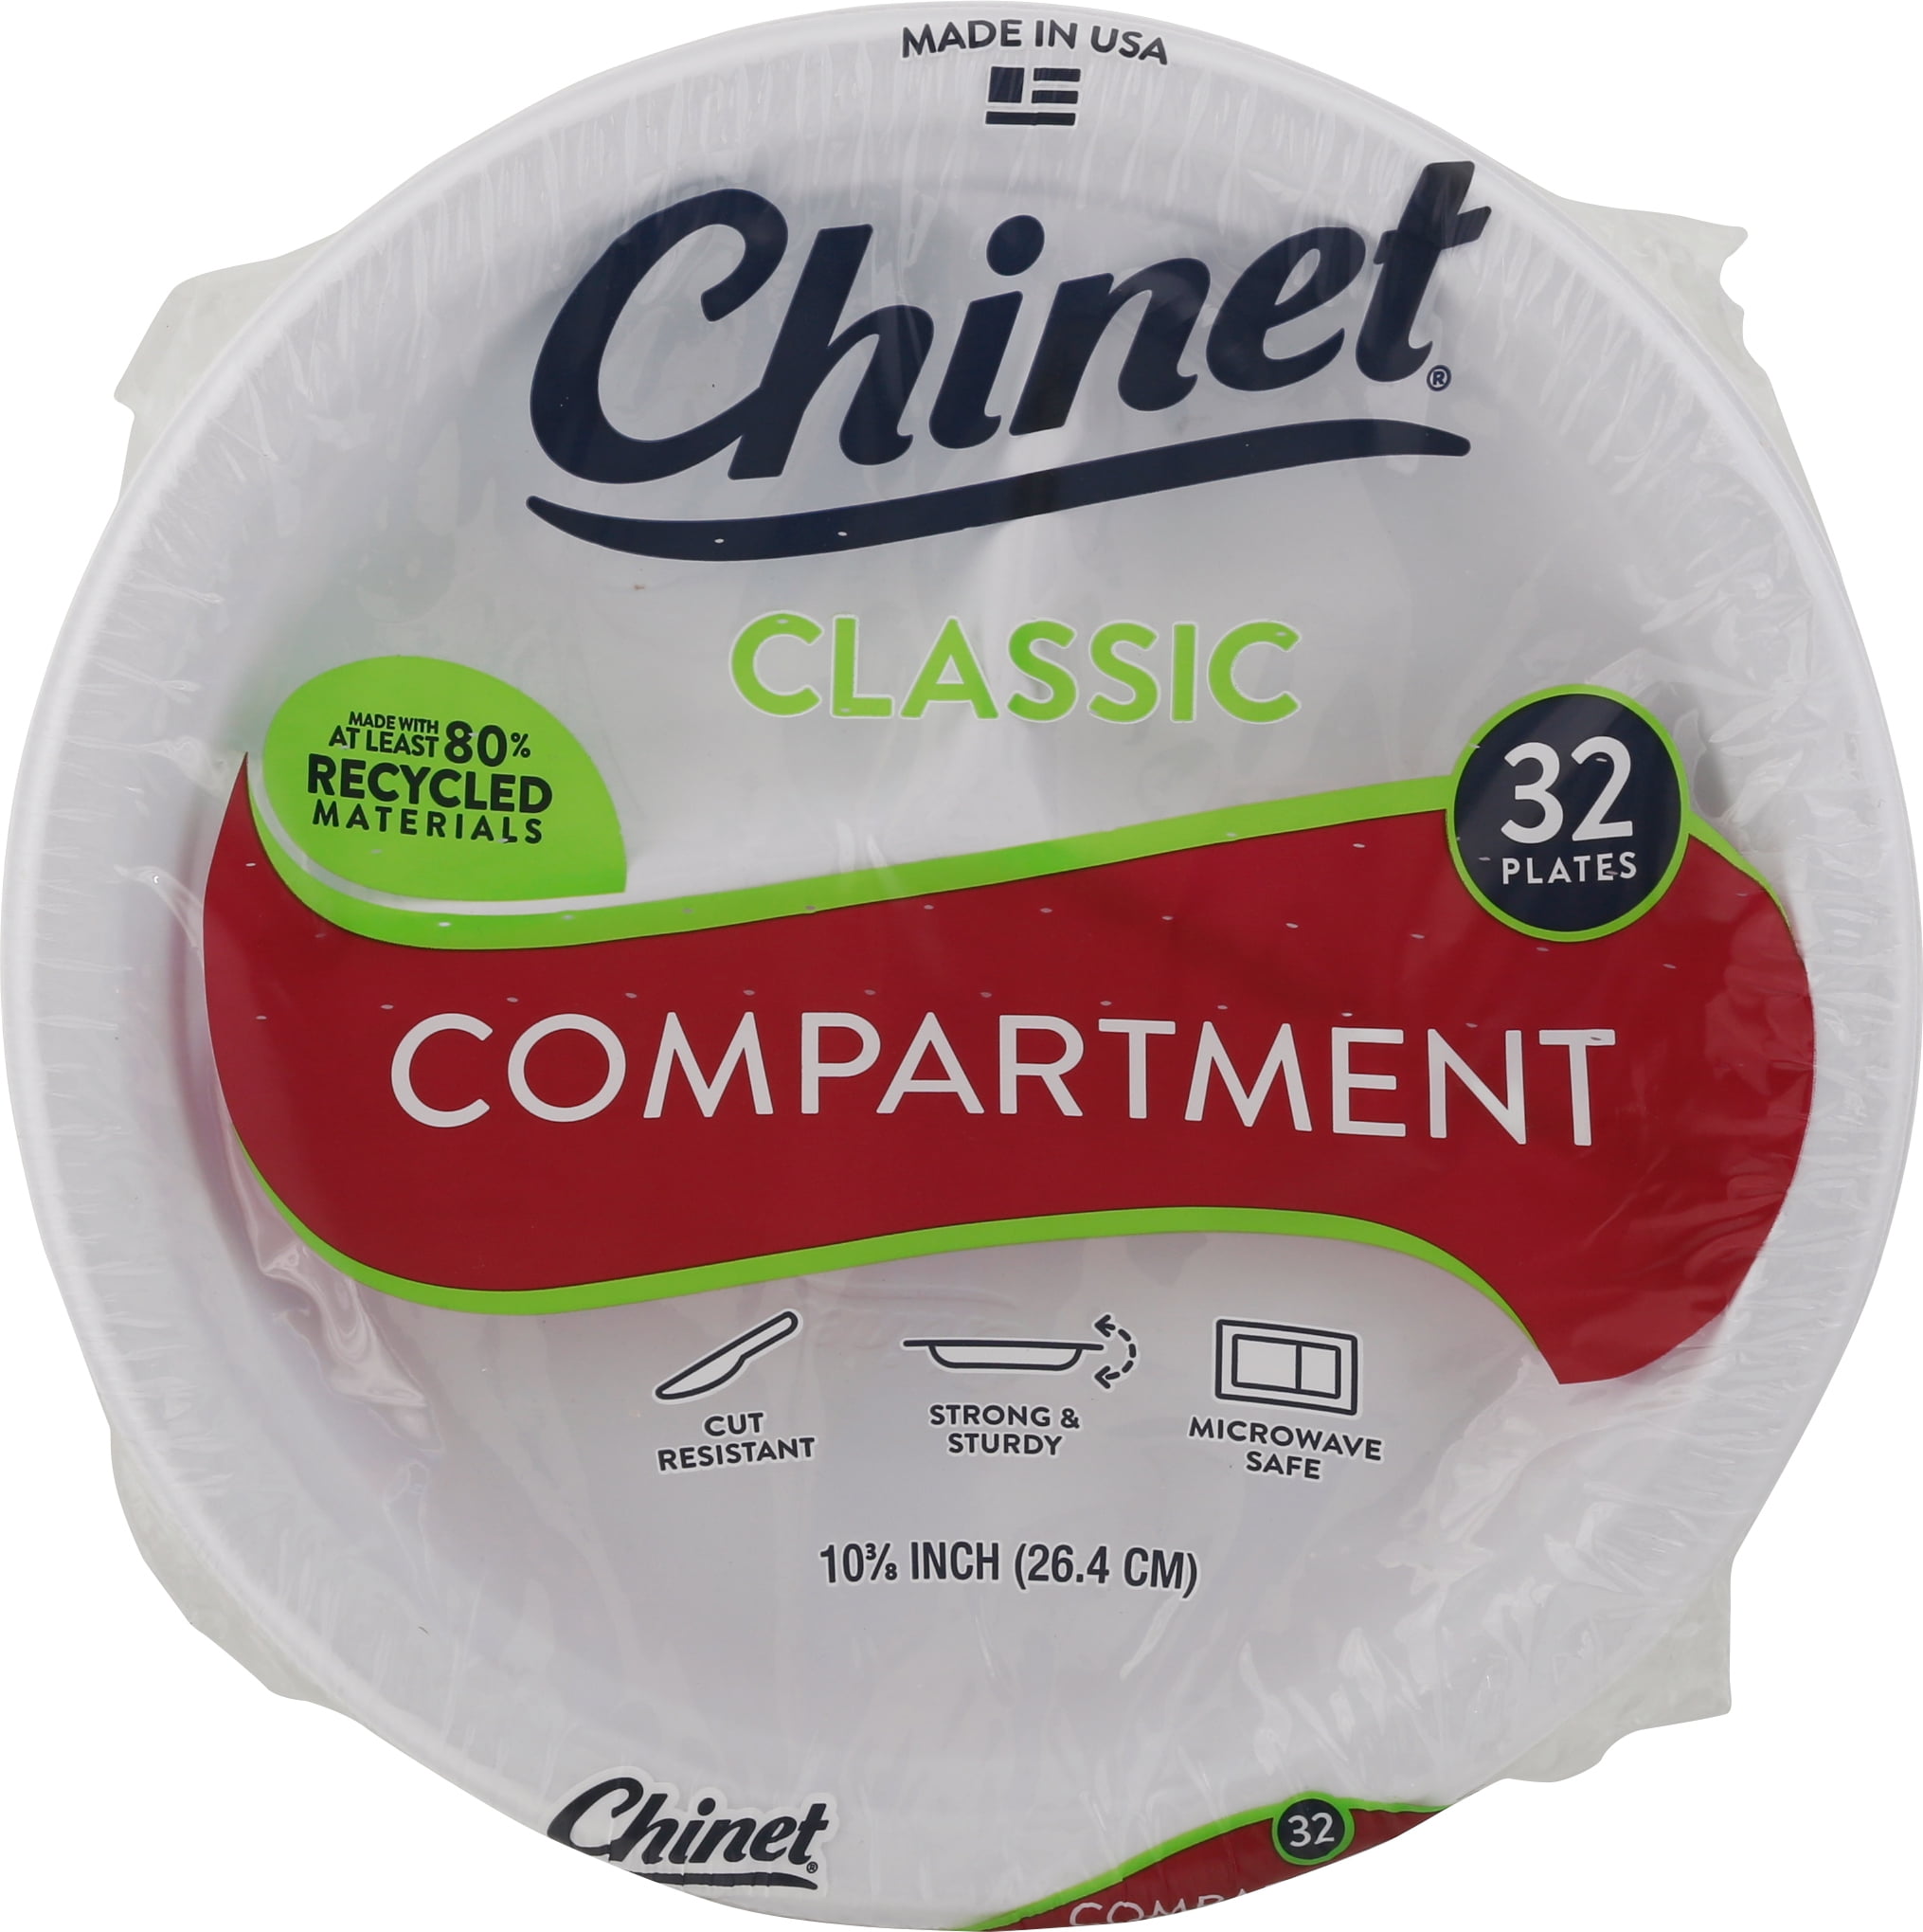 Chinet Classic® Premium Dinner Paper Plates, White, 10 3/8”, 40 Count